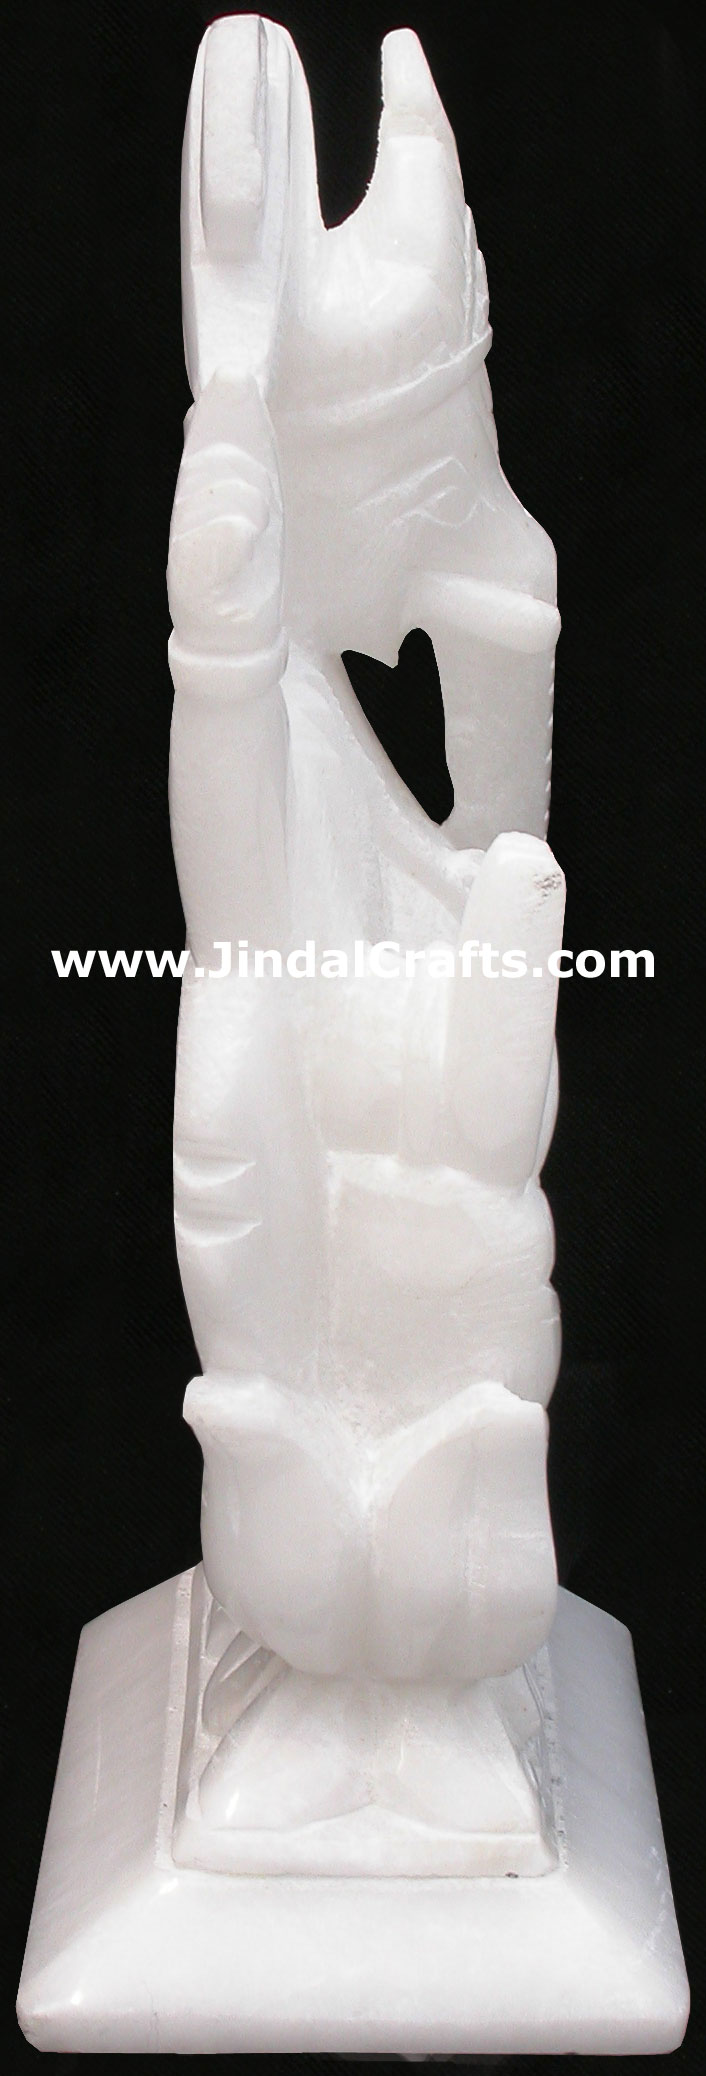 Handcarved Stone Ganesha Indian Stucpture Art